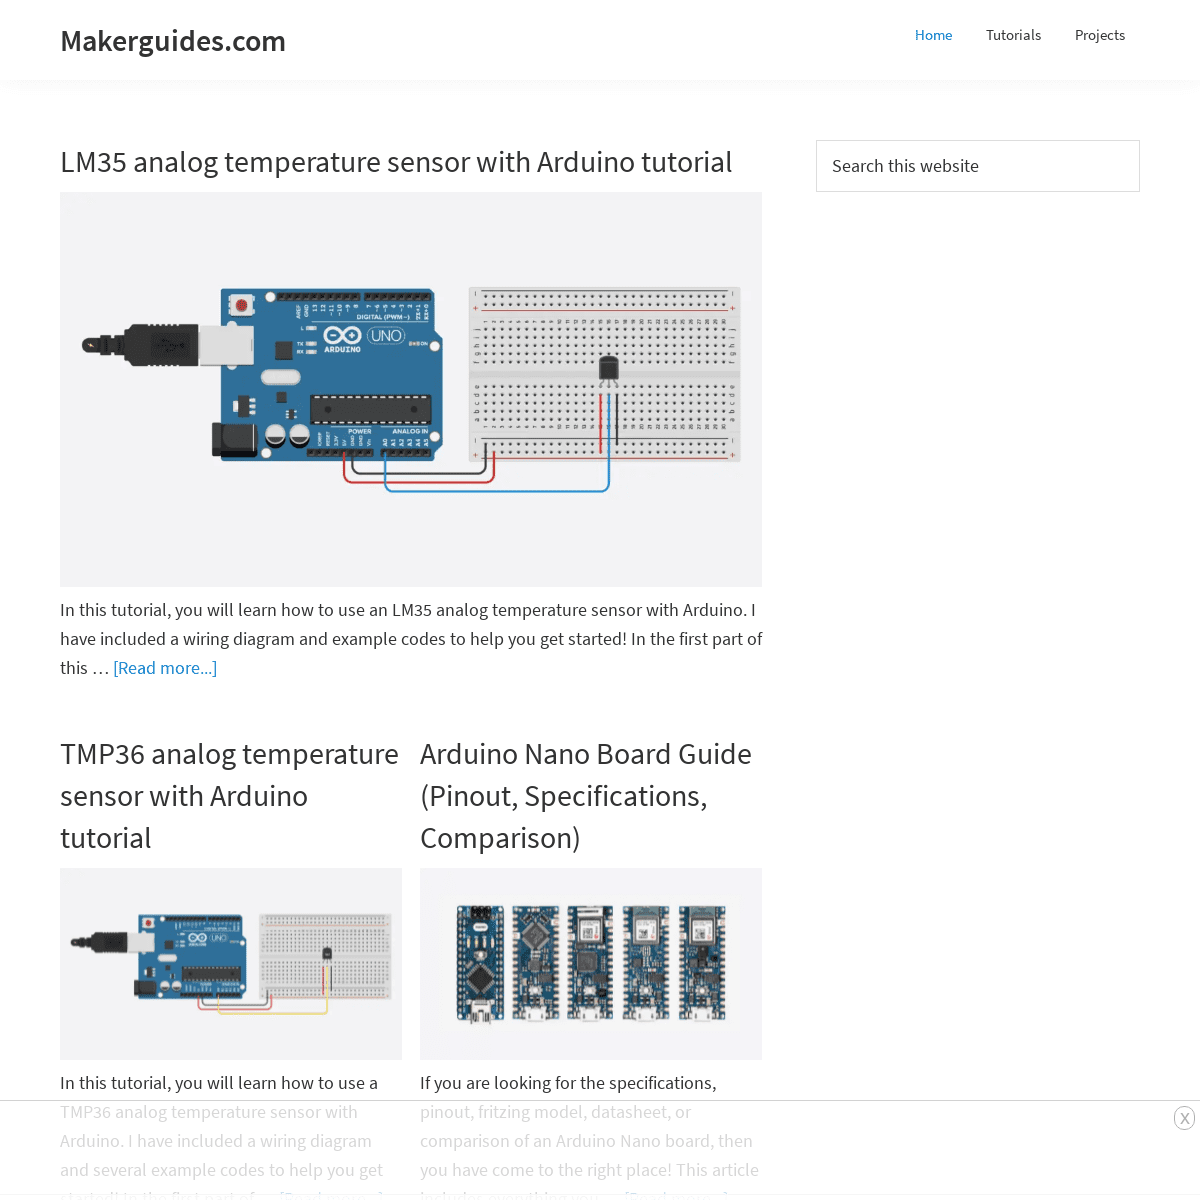 A complete backup of https://makerguides.com